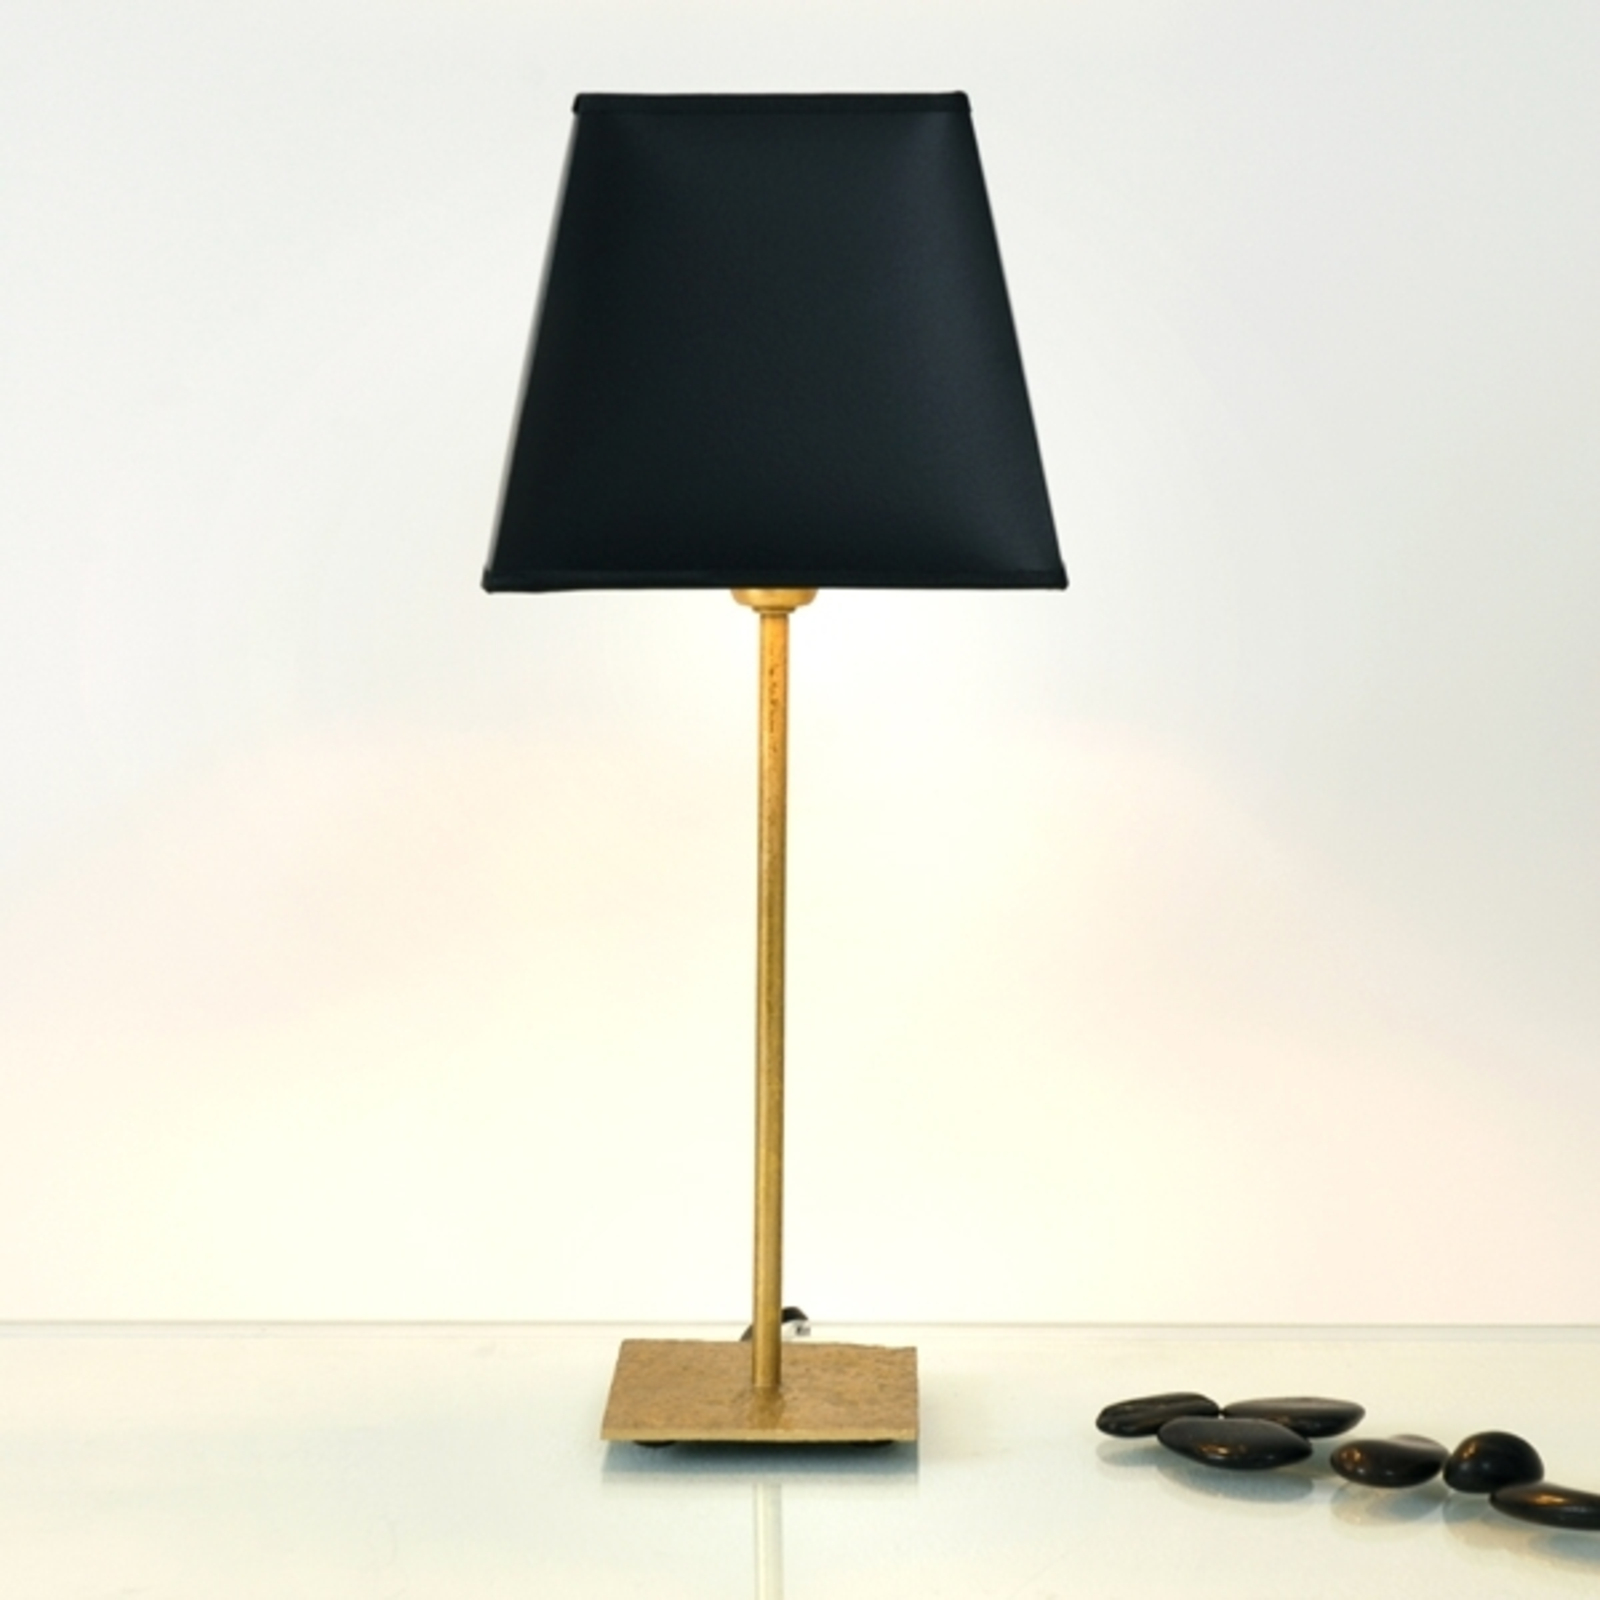 Classic table lamp Mattia with square shade